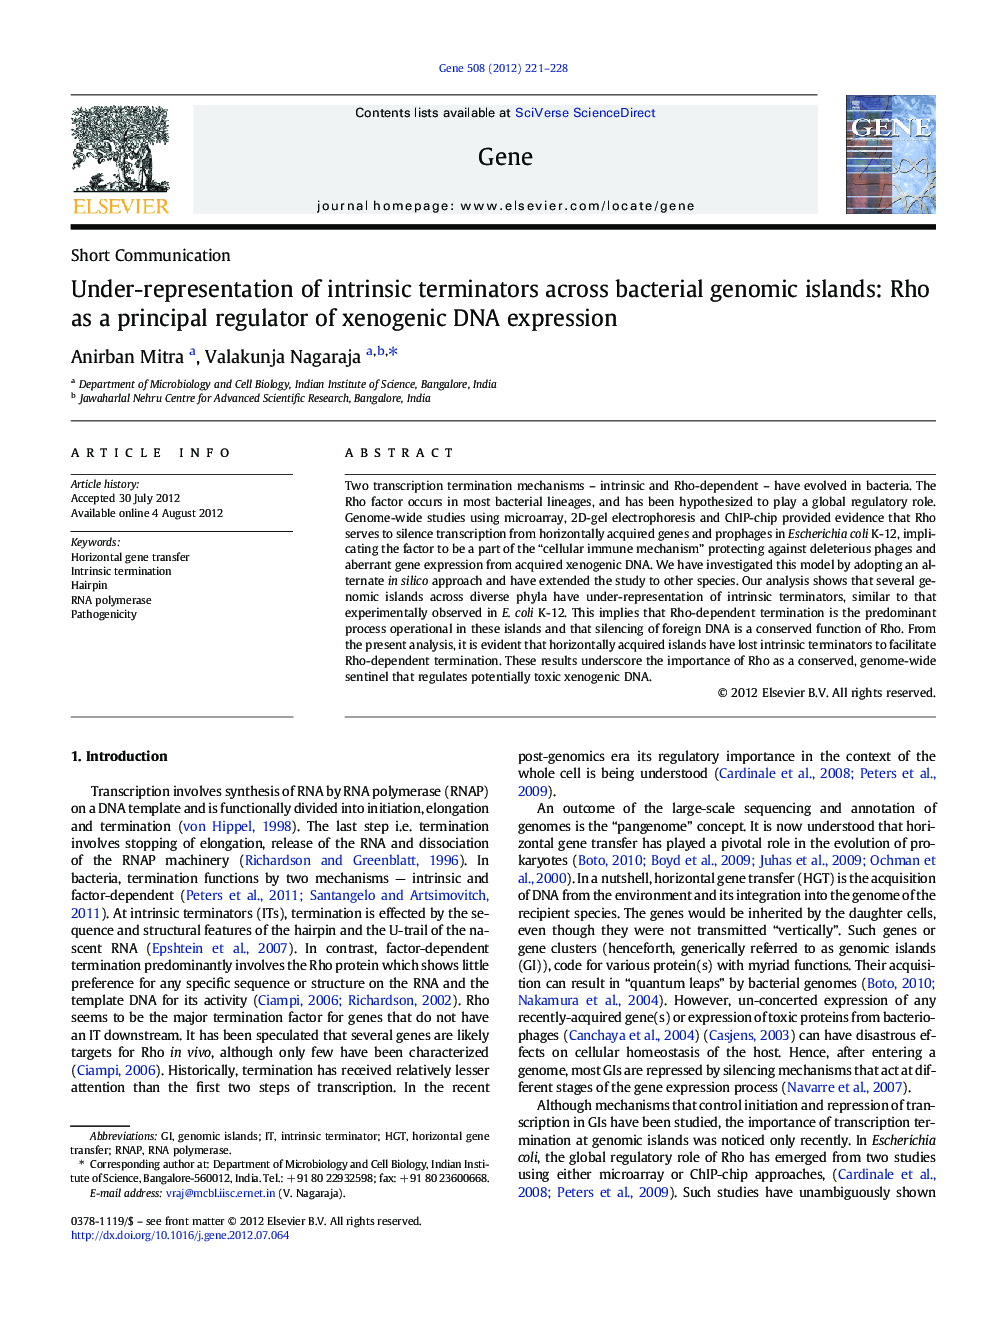 Under-representation of intrinsic terminators across bacterial genomic islands: Rho as a principal regulator of xenogenic DNA expression